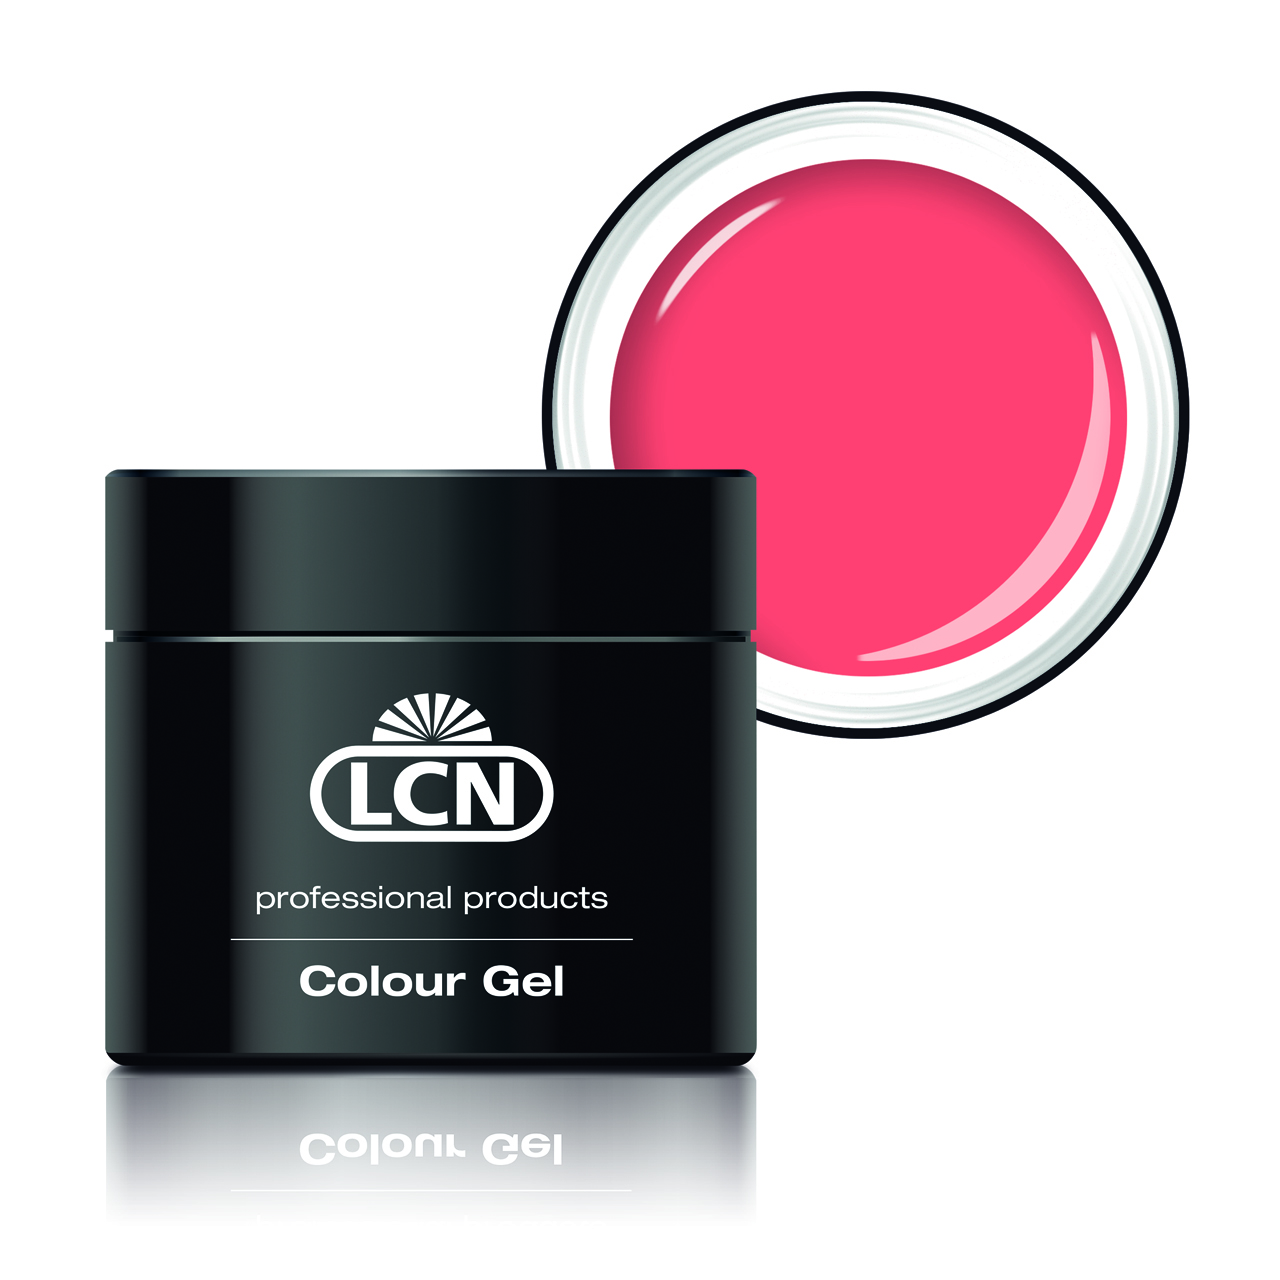 Colour gels coral beach gel u boji 5ml20605 807.jpg